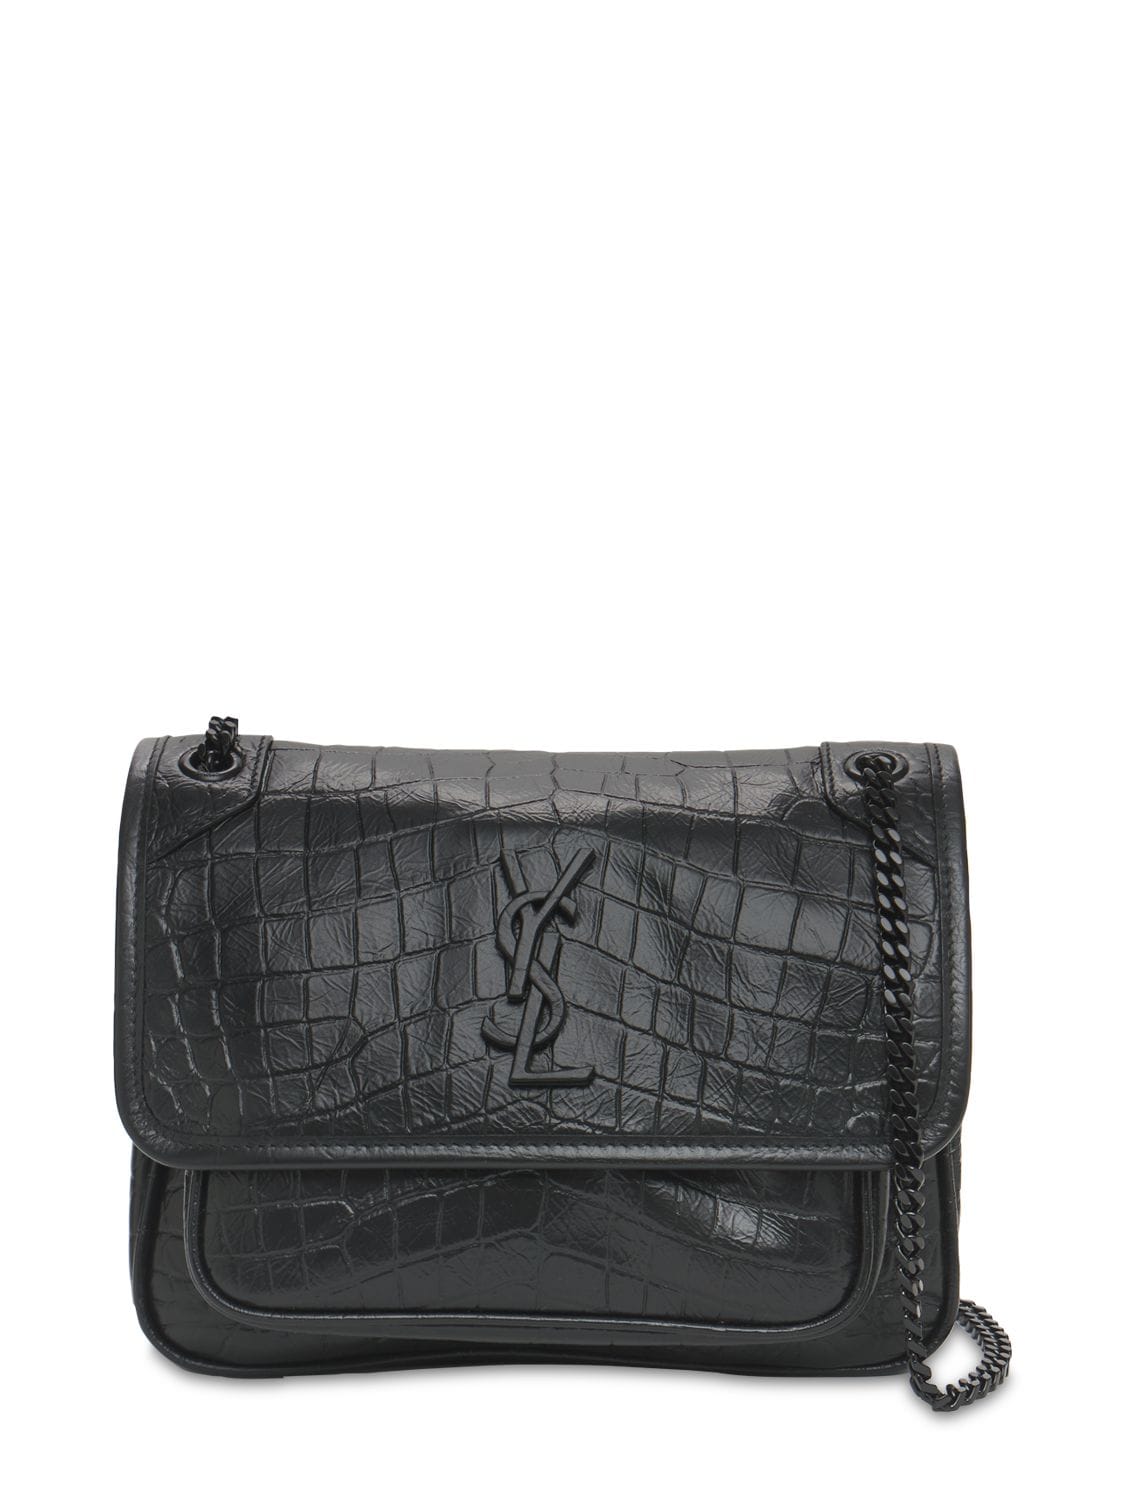 Saint Laurent Baby Niki Croc Embossed Leather Bag In Black